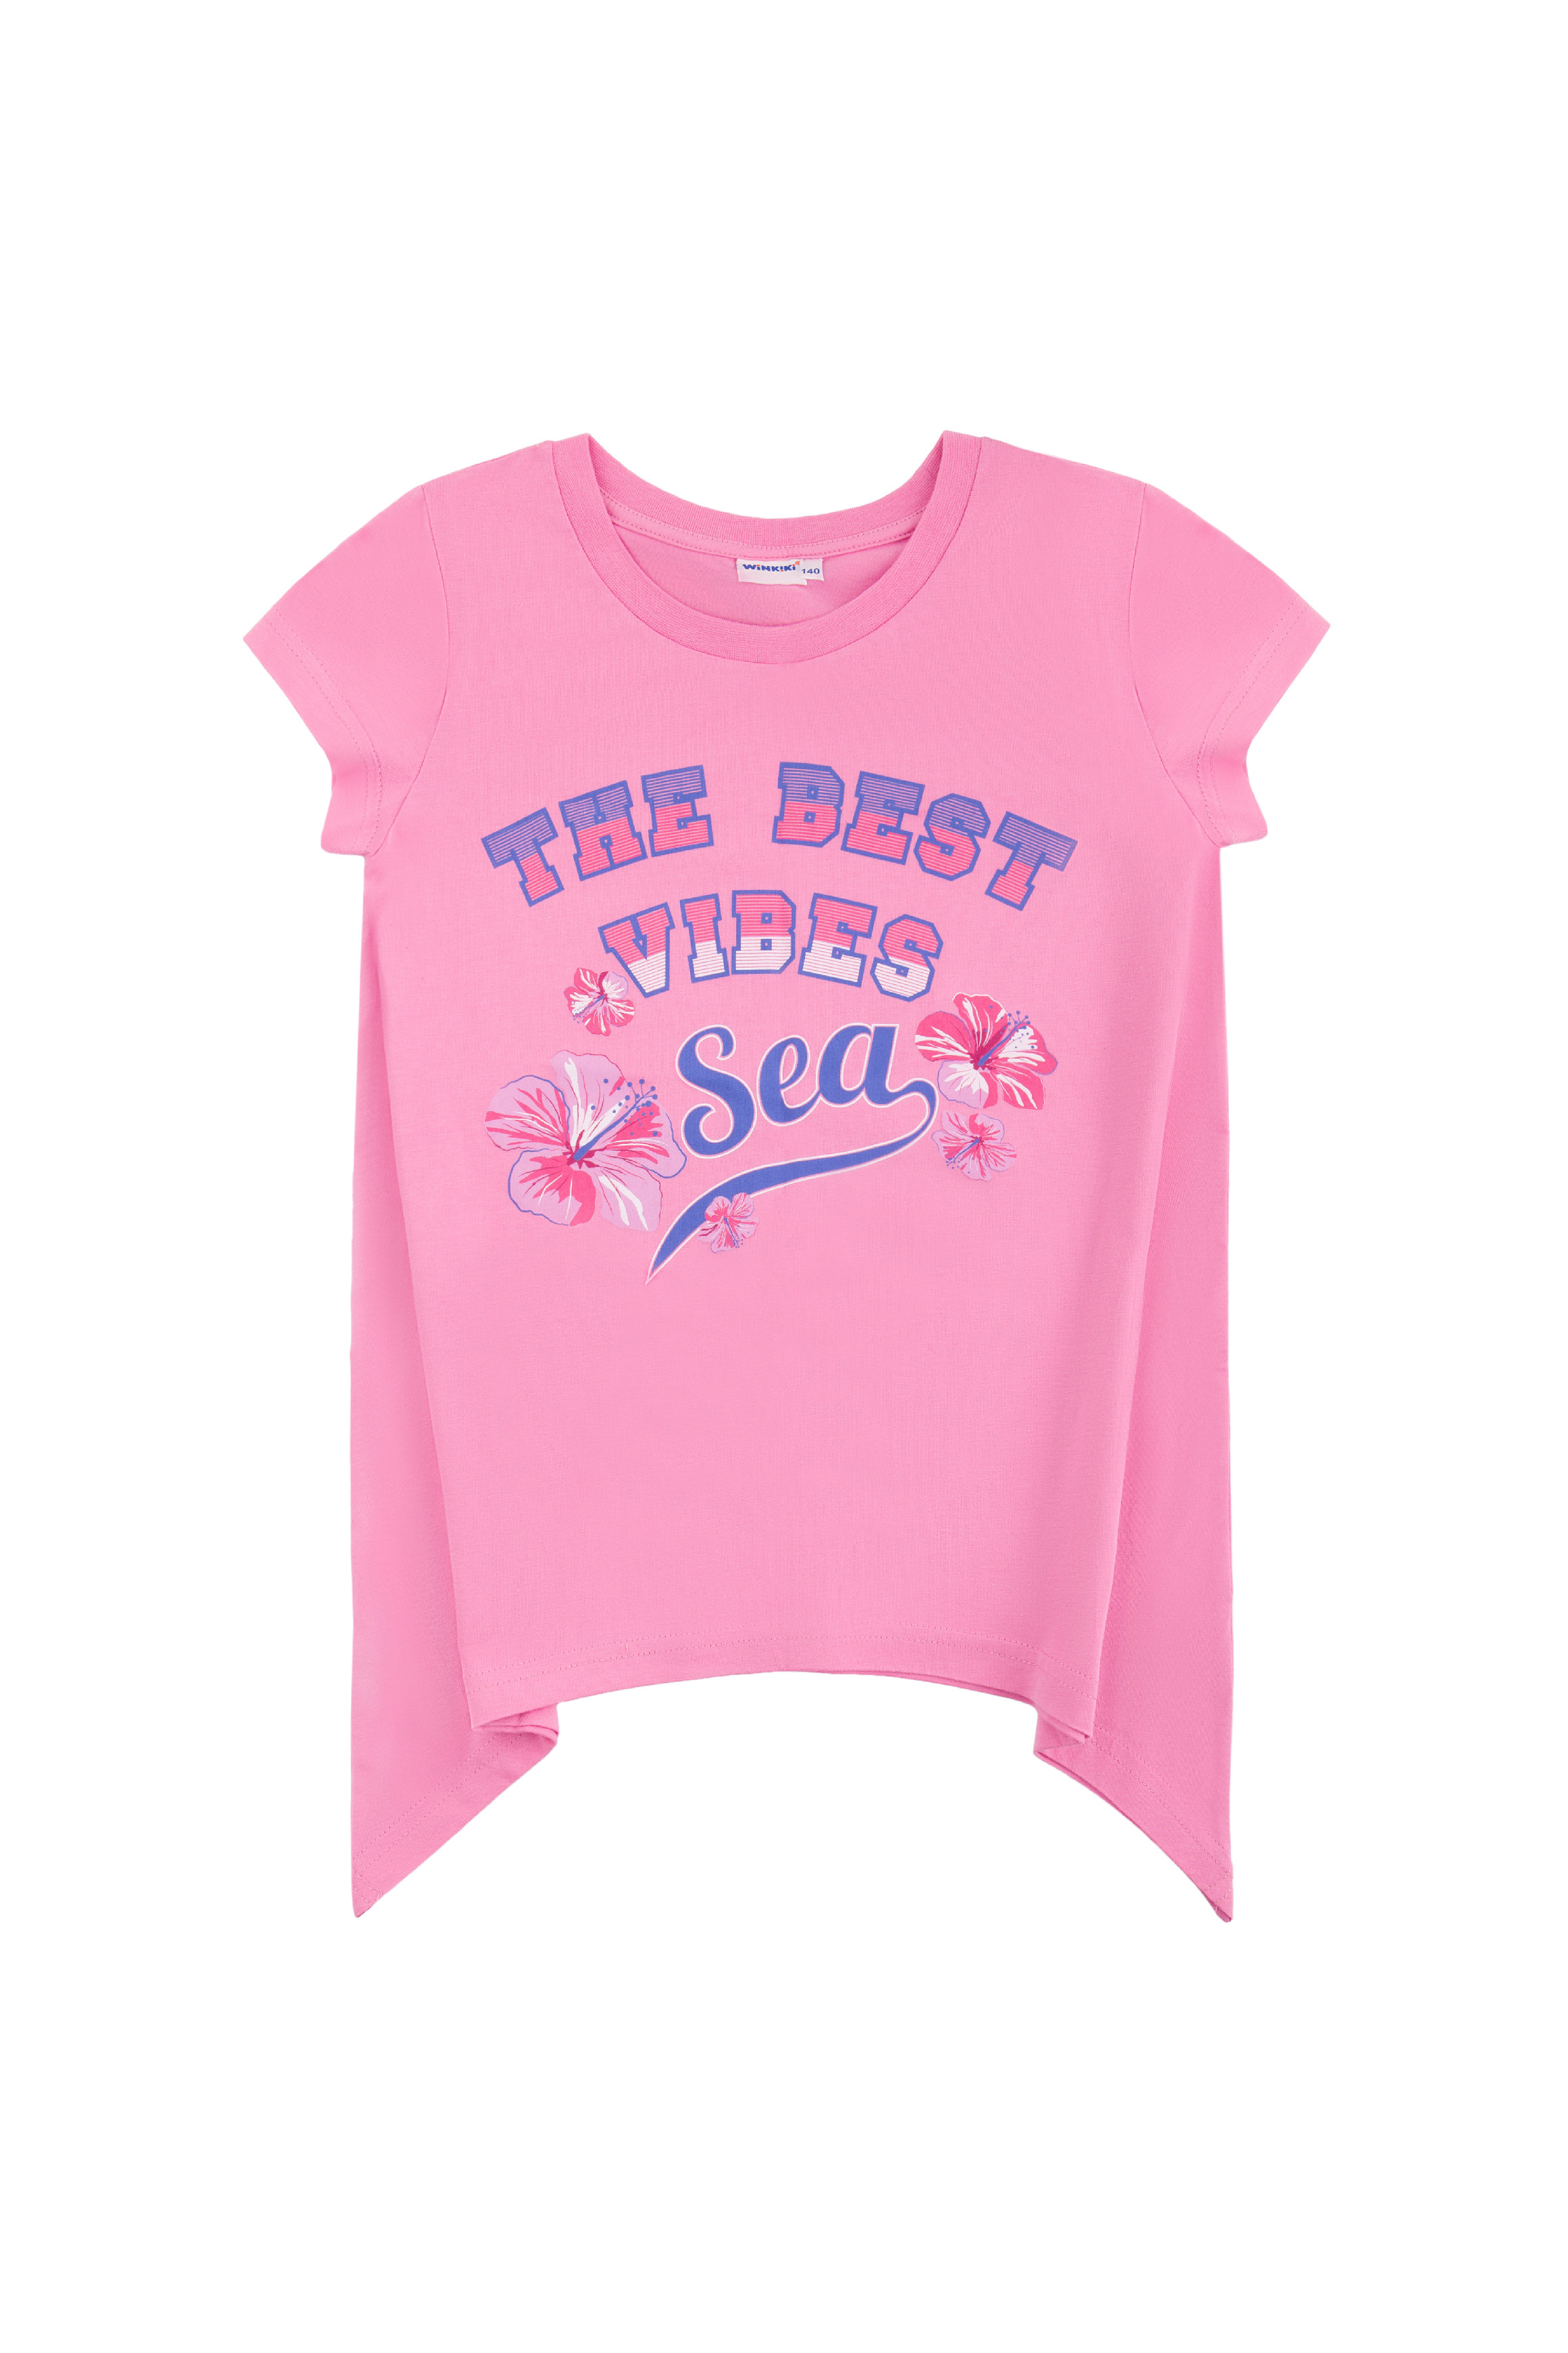 Dívčí triko - Winkiki WTG 01801, růžová Barva: Růžová, Velikost: 158